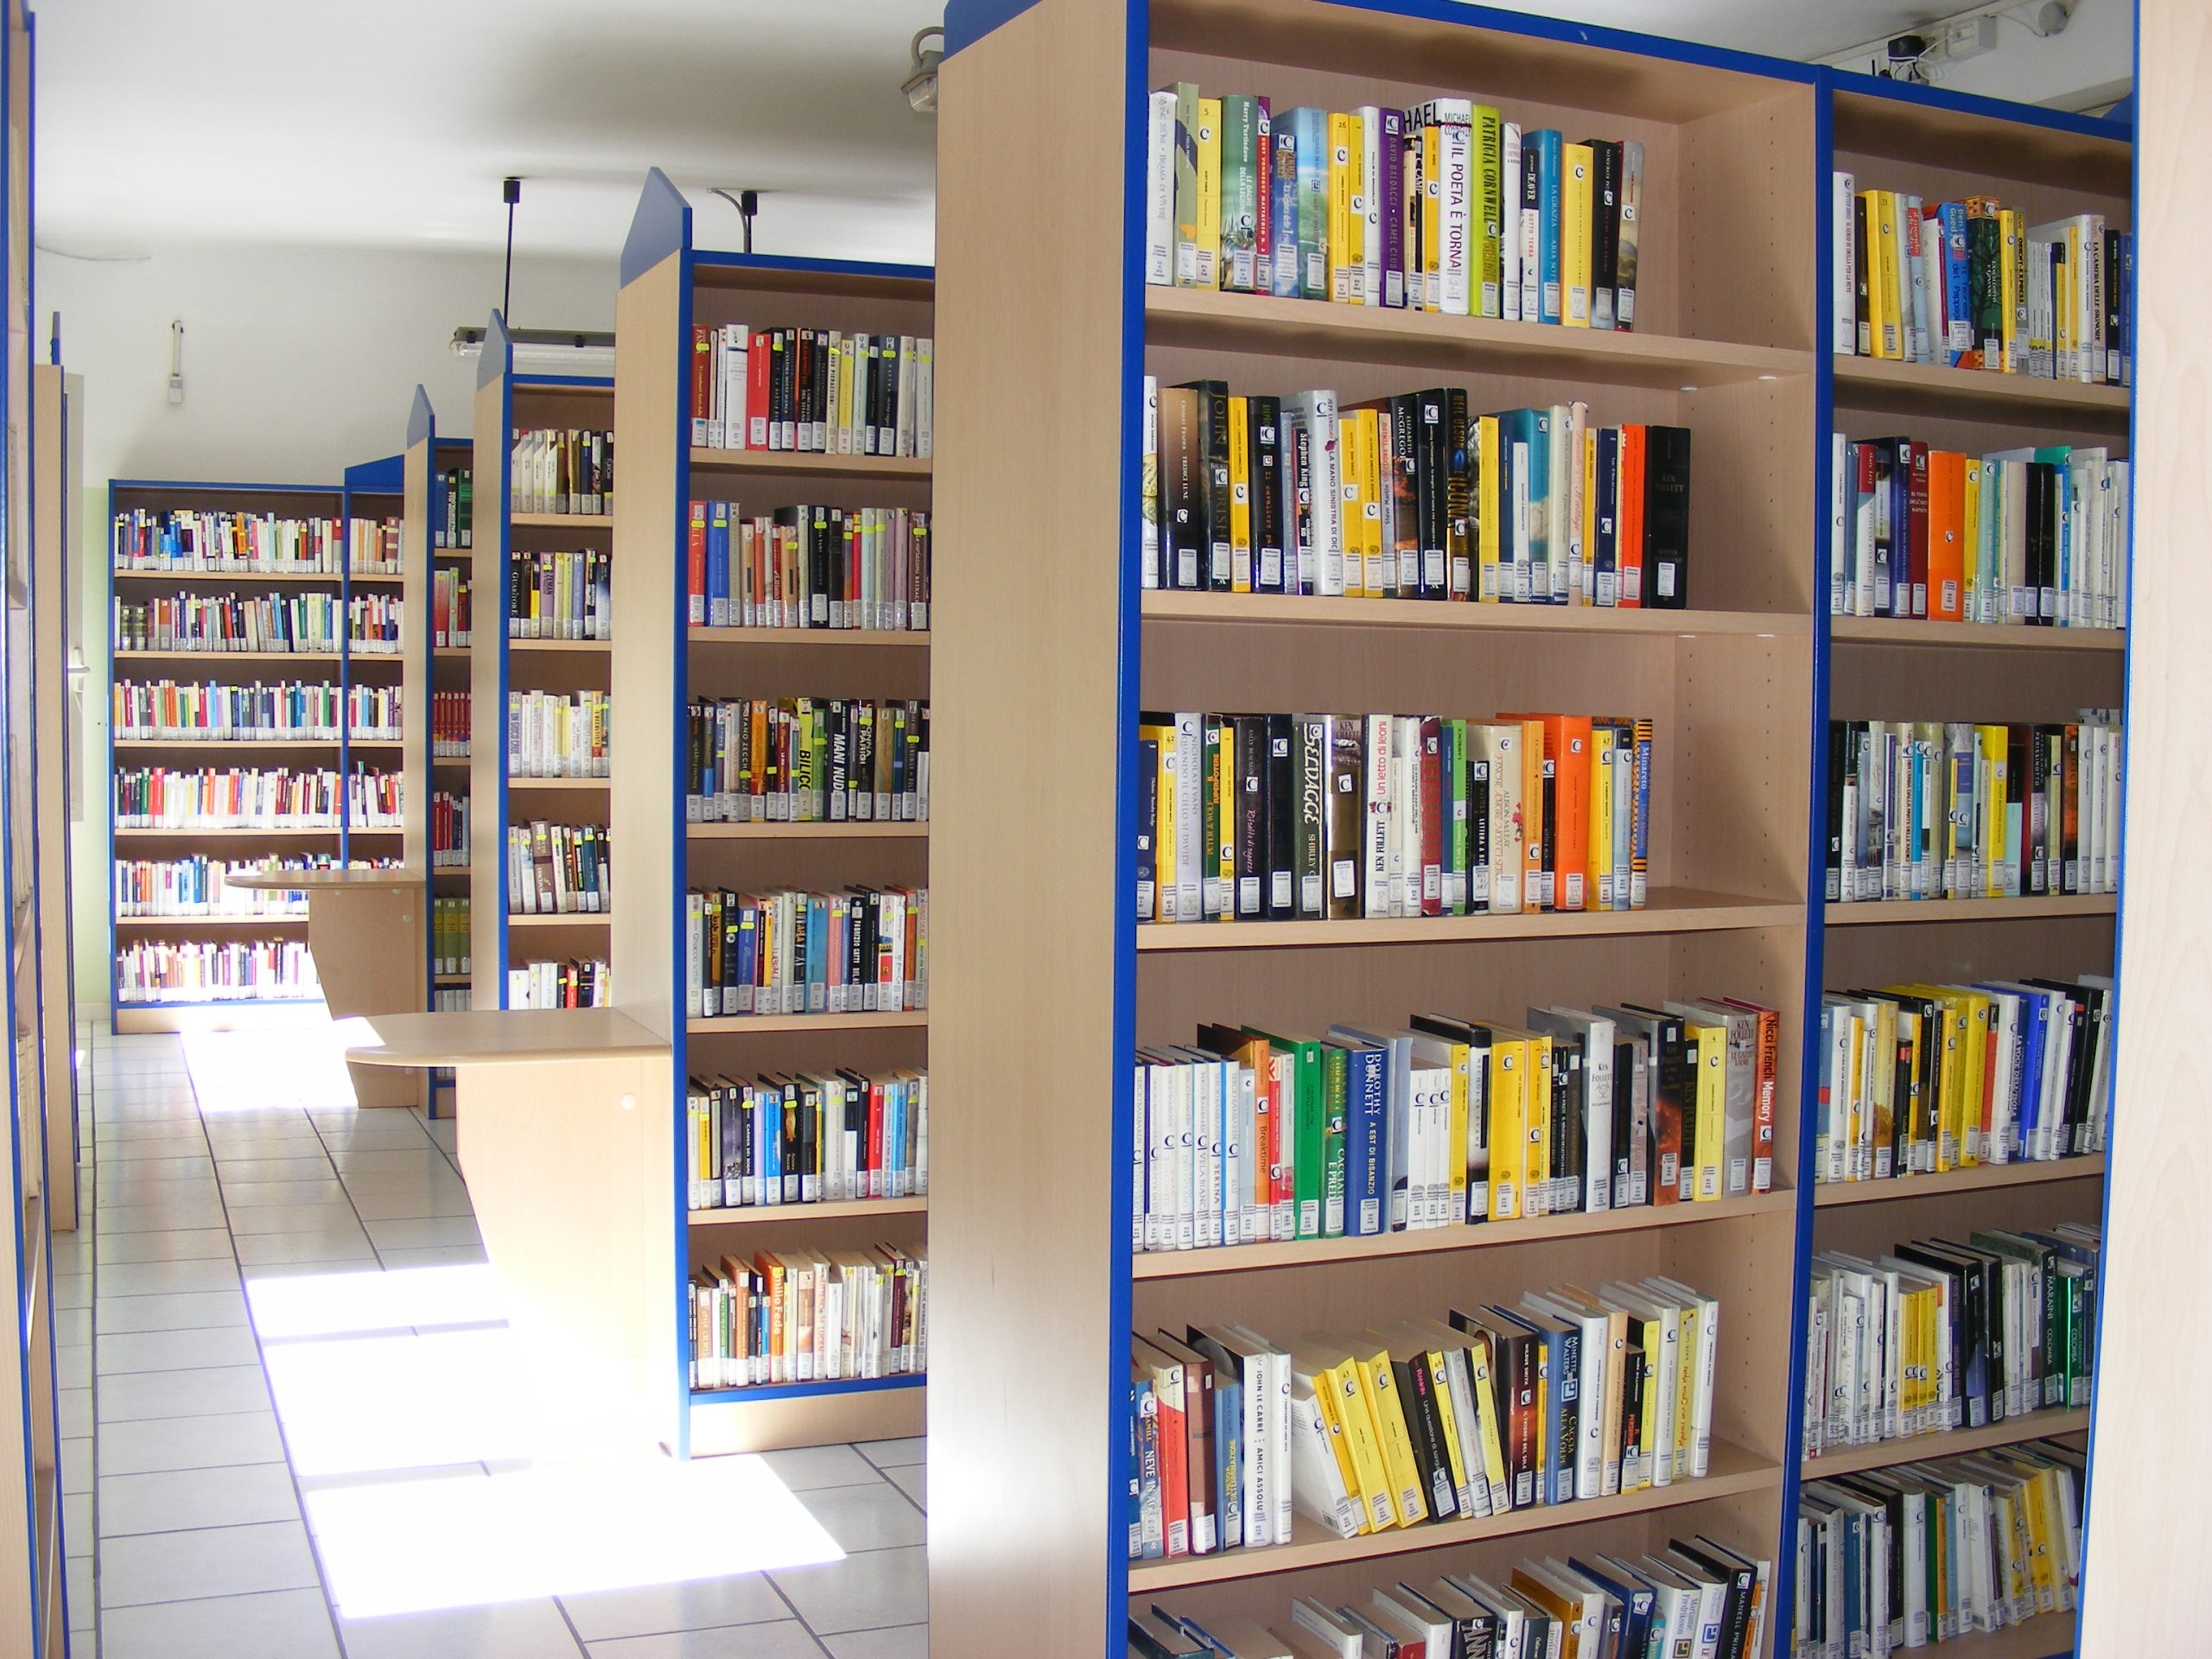 La Biblioteca Provinciale di Frosinone dotata di WI-FI